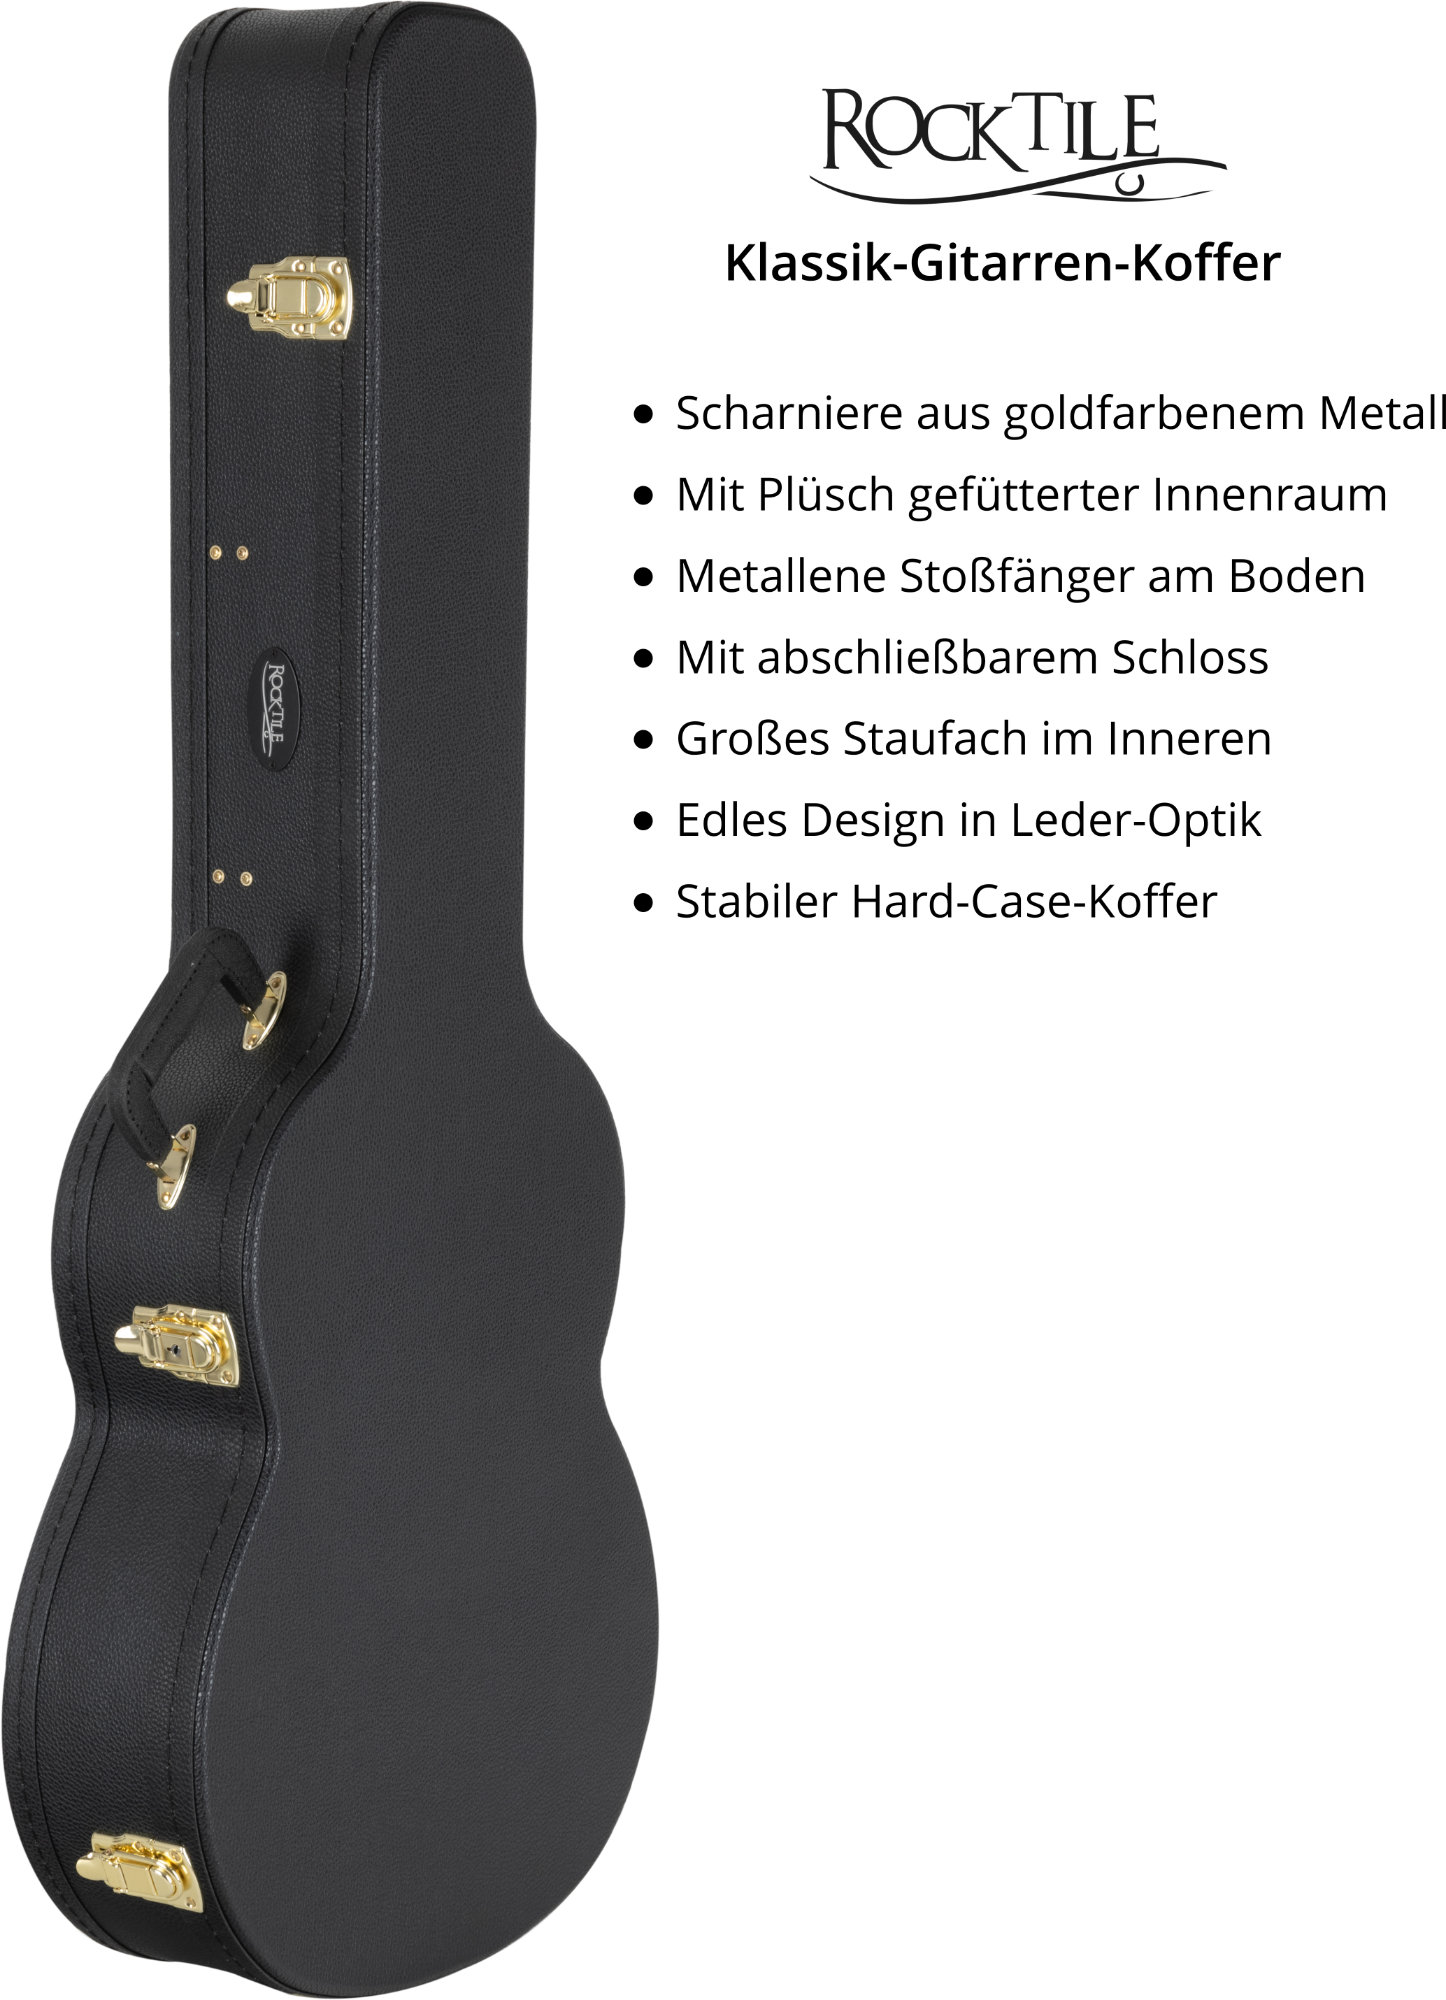 Rocktile Koffer für Klassik-Gitarre Abbildung 3